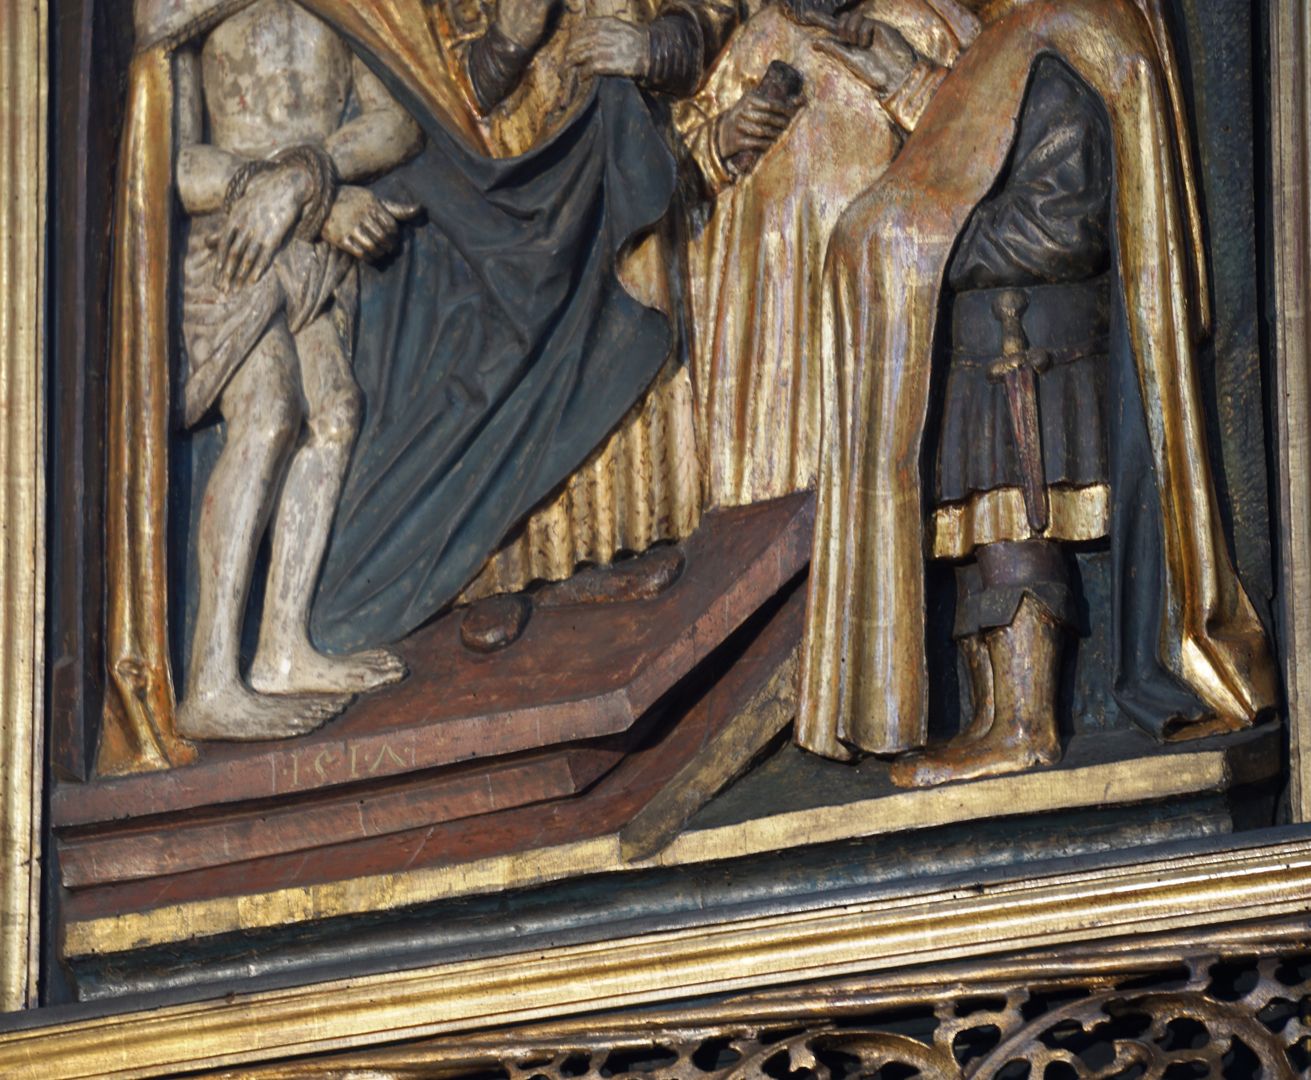 Kreuzaltar linker Flügel oben: Ecce homo, Datierung 1517